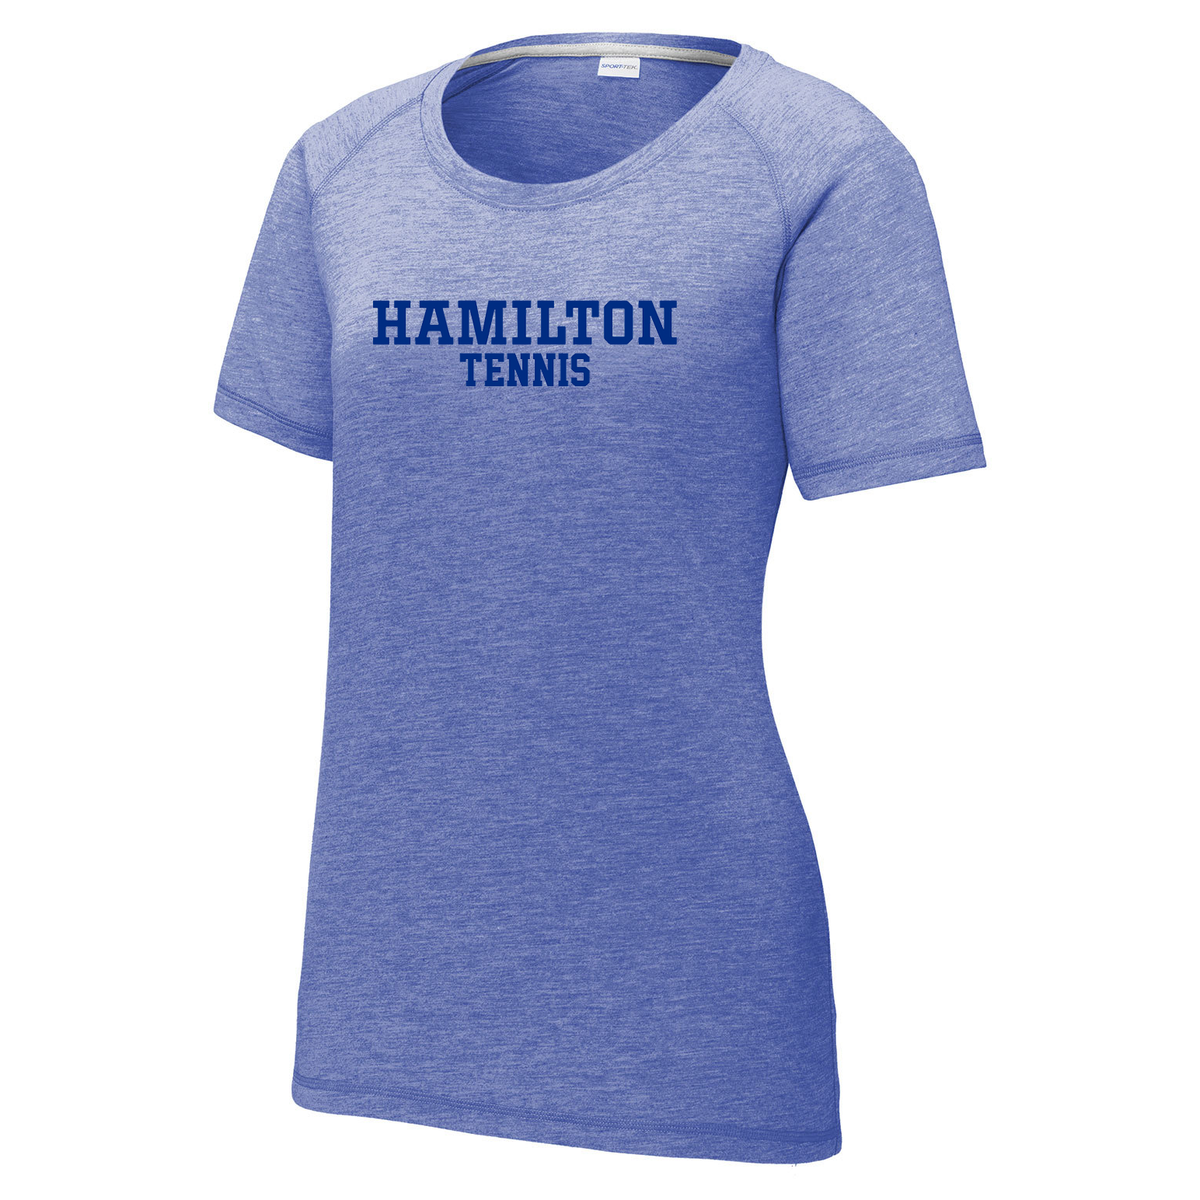 Hamilton College Tennis Women's Raglan CottonTouch